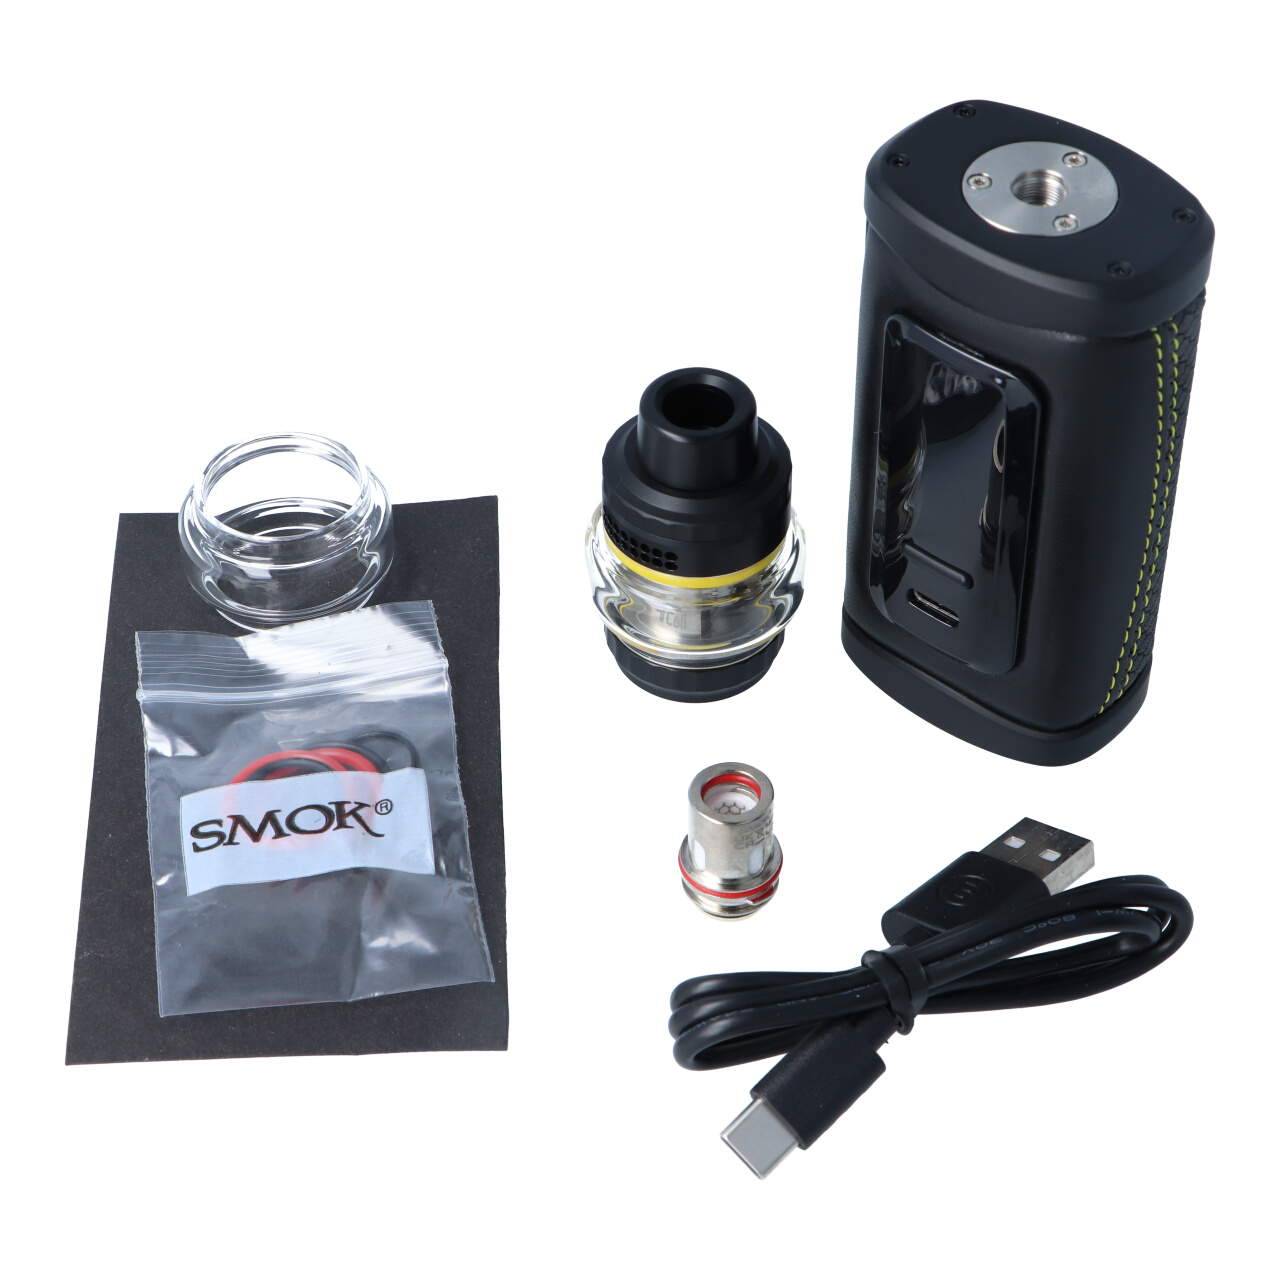 Smok - Morph 3 Kit inkl. T-Air Tank (5 ml) - E-Zigarette inkl. 2 x 18650  Akku (2500 m kaufen bei